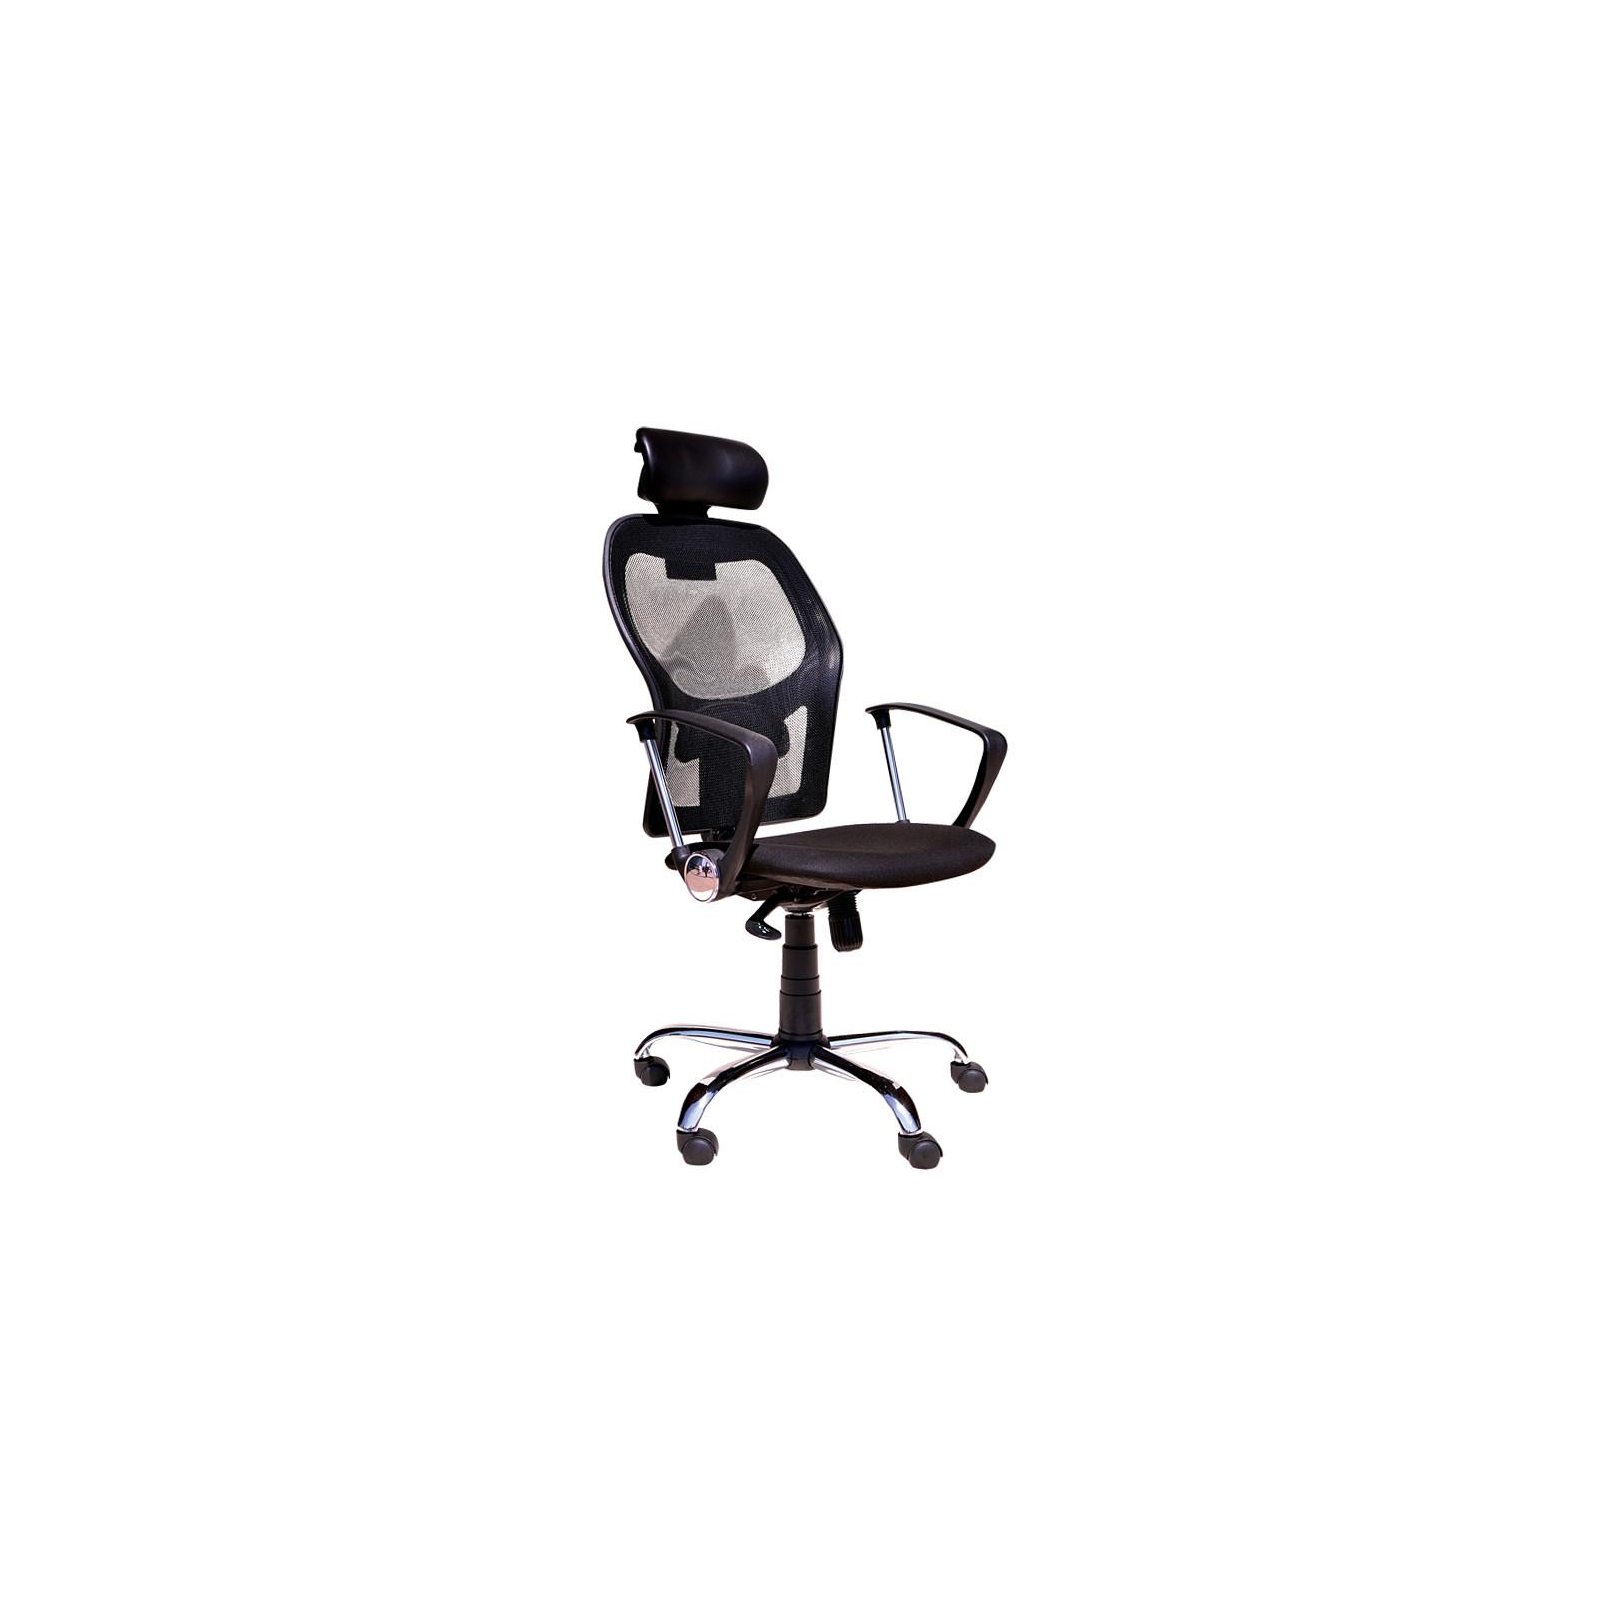 Офисное кресло Примтекс плюс Vegas GTP Lux Chrome C-11 (Vegas GTP LUX Chrome C-11)